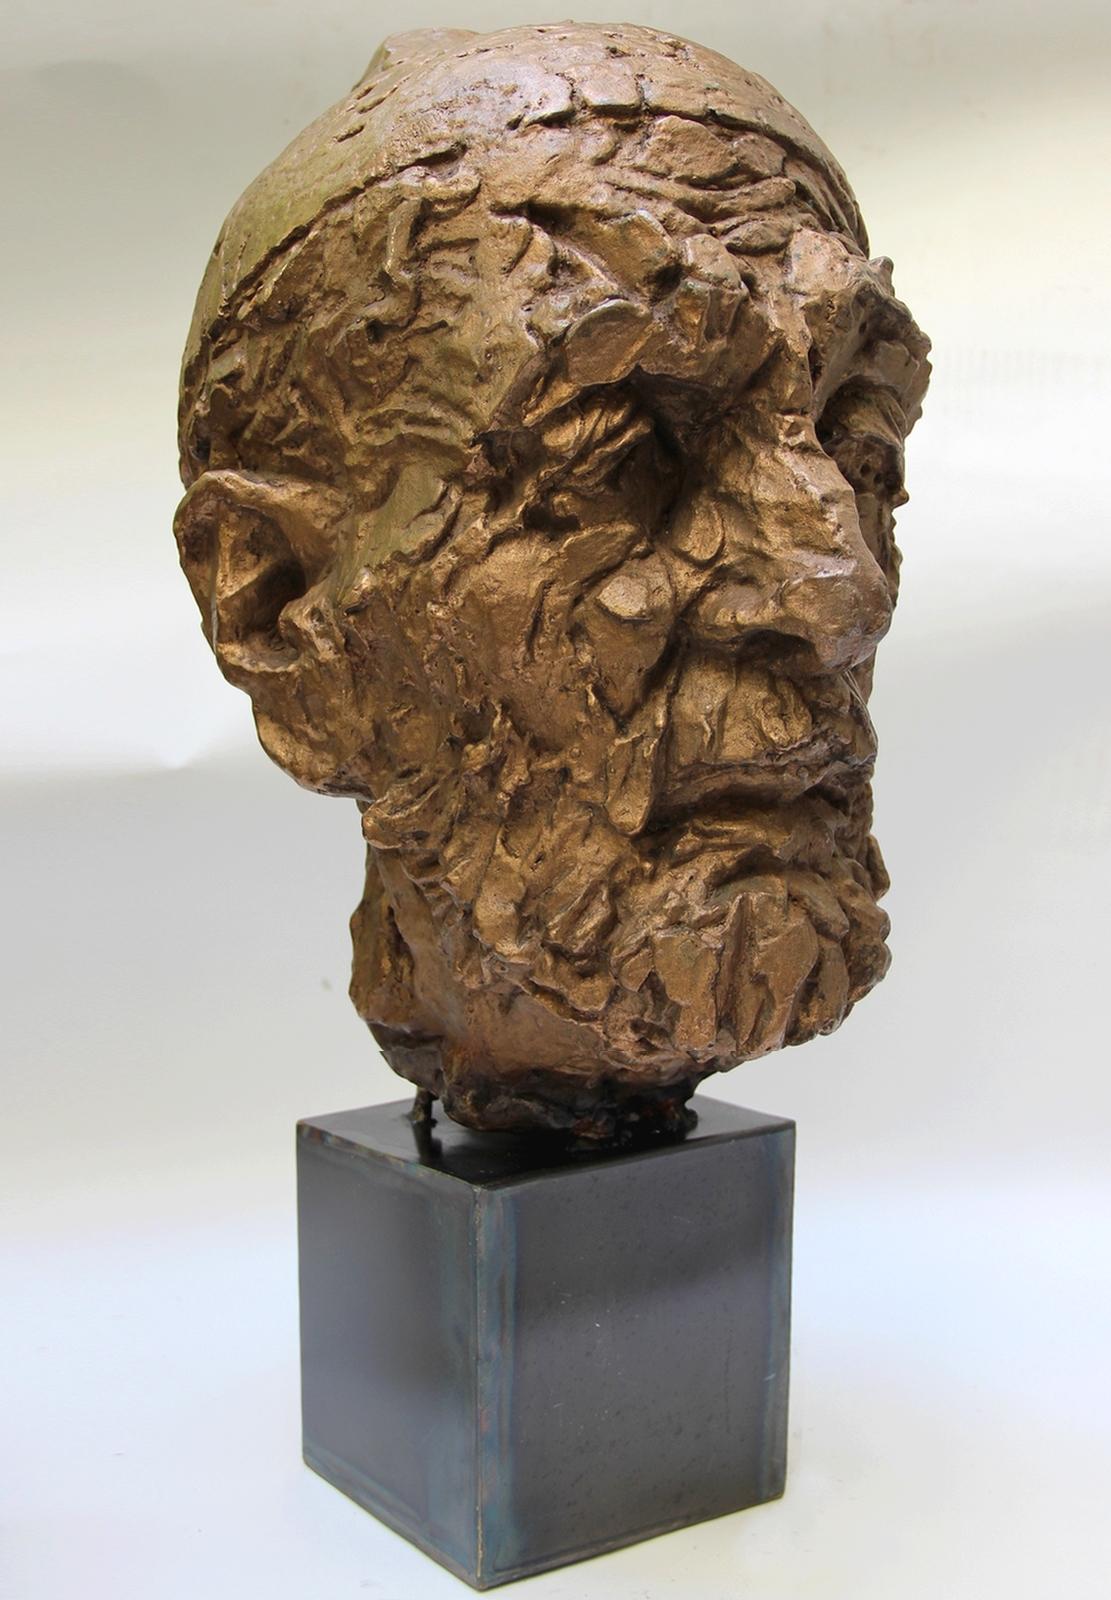 Dutch Willem Verbon, Kees van Dongen, Ninety Years Old, First Bronze Cast, 1968